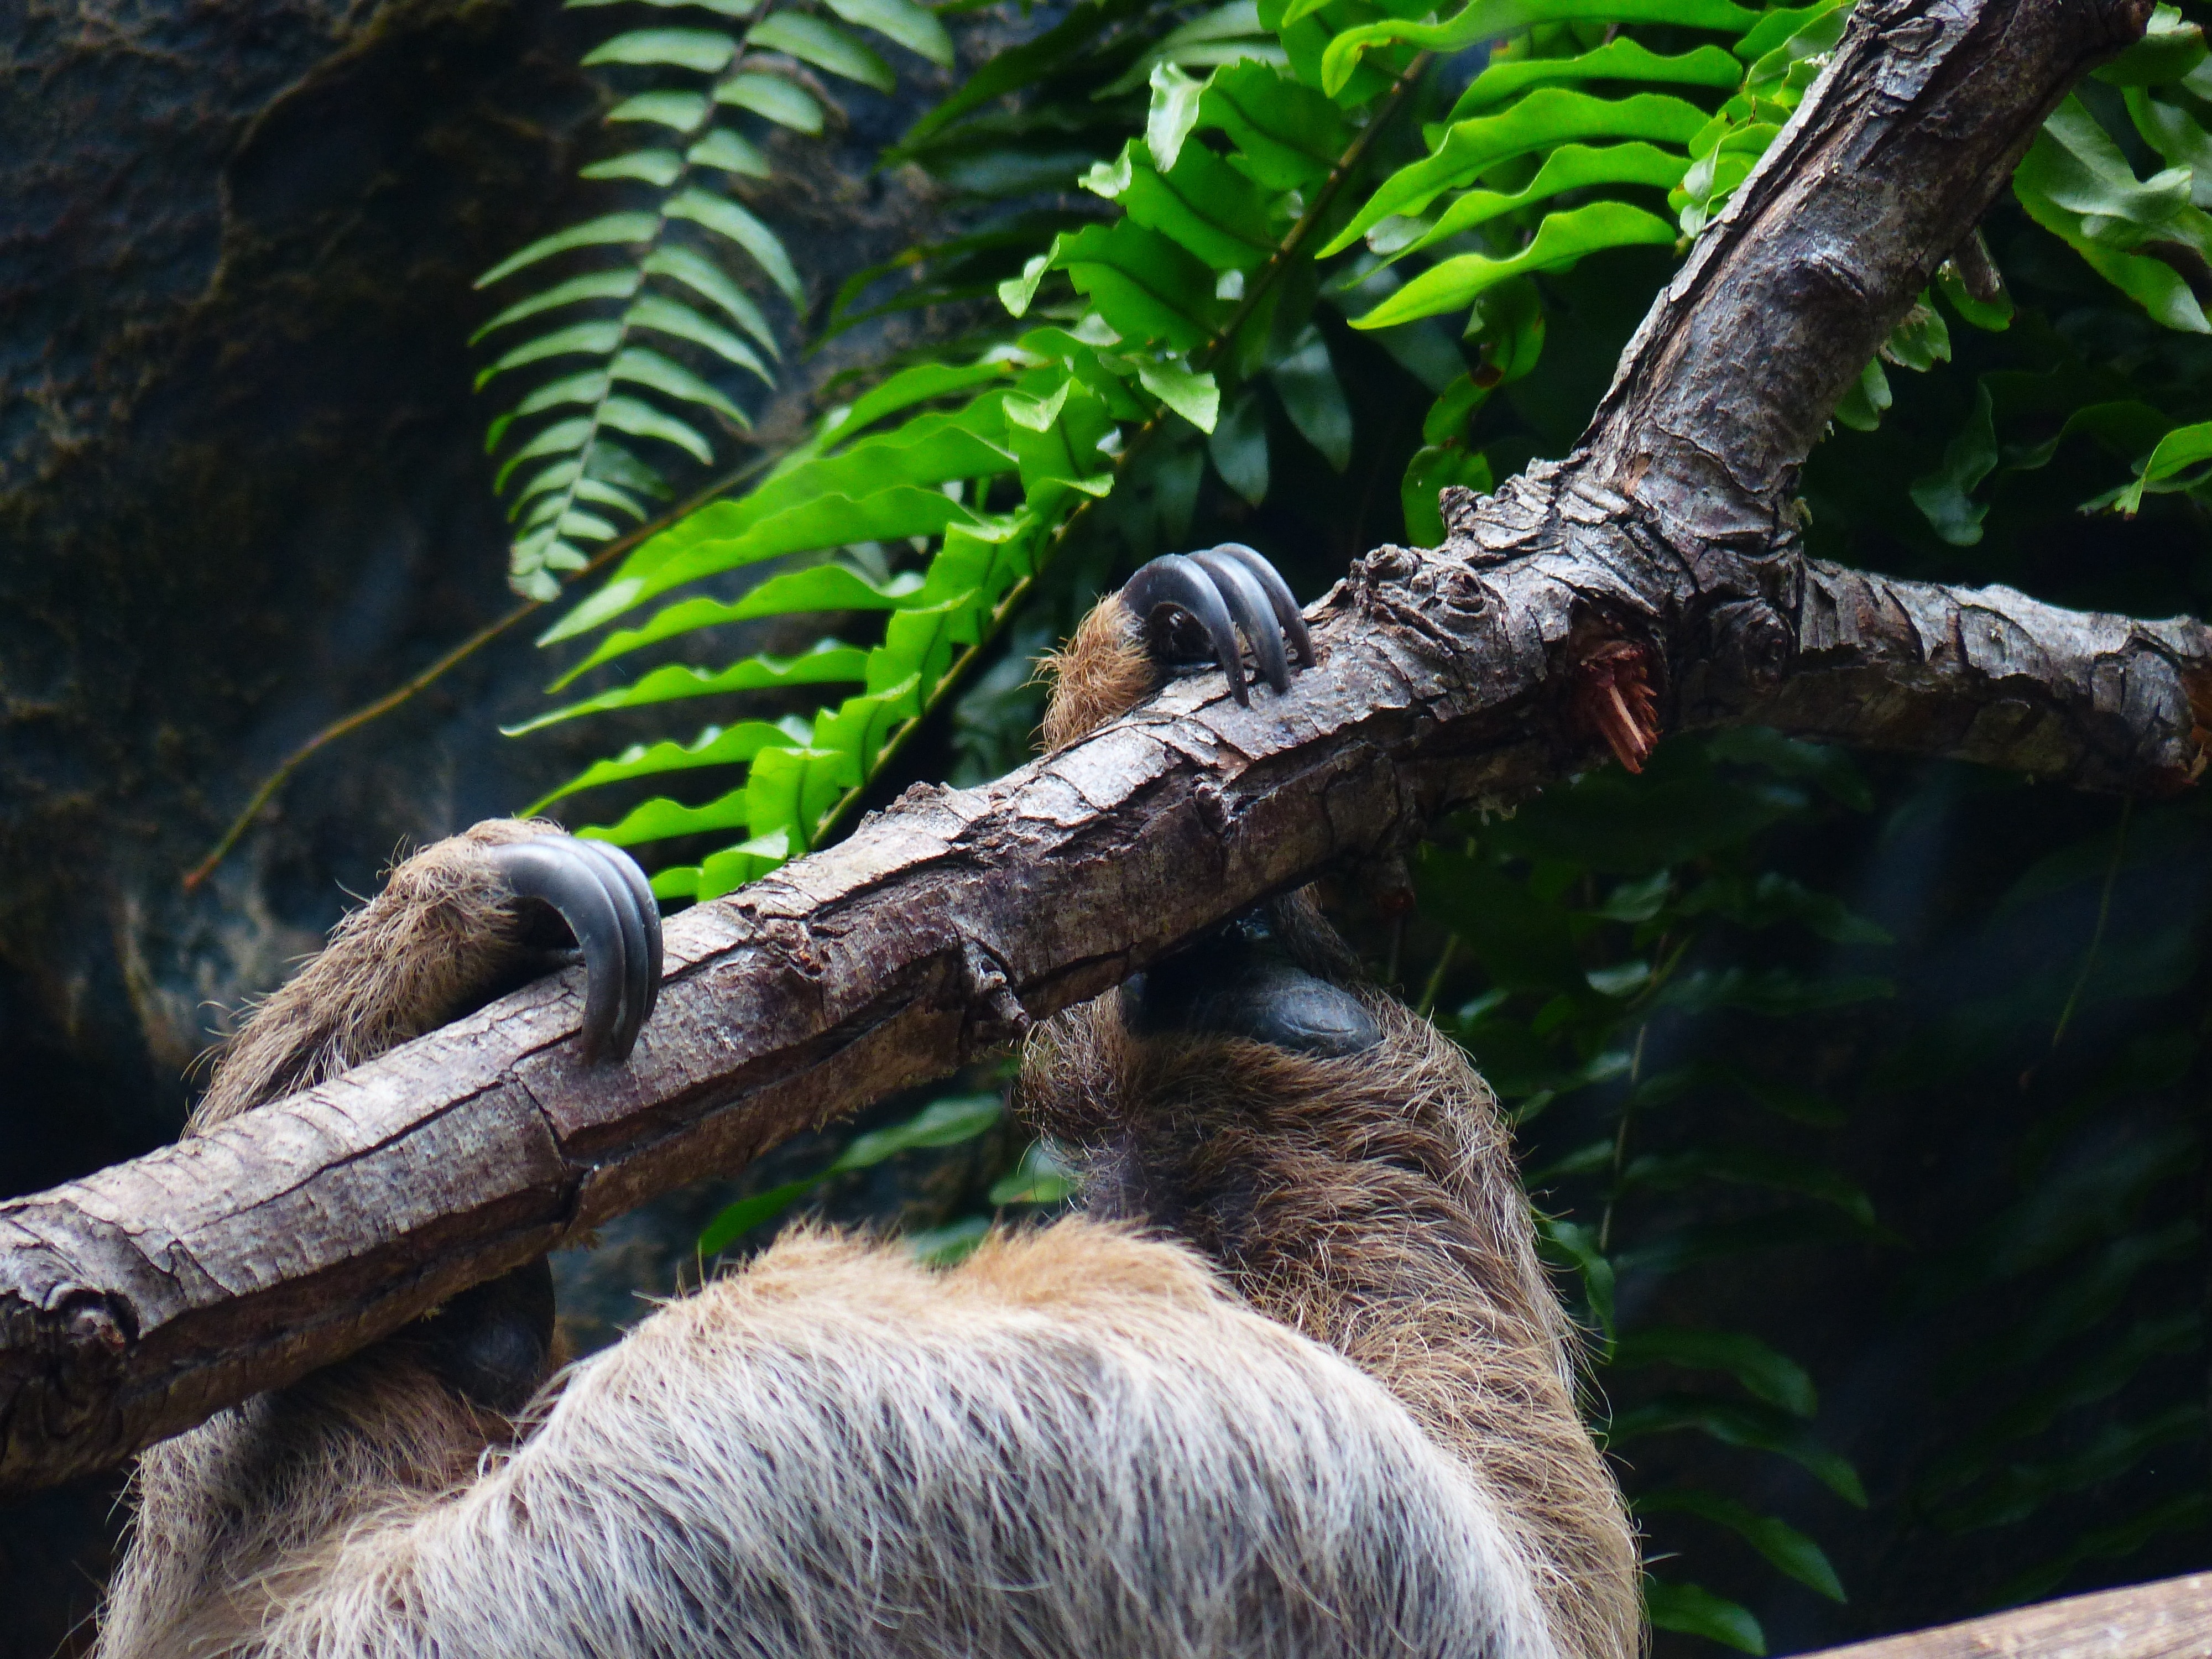 brown sloth swinging on tree branch during daytime